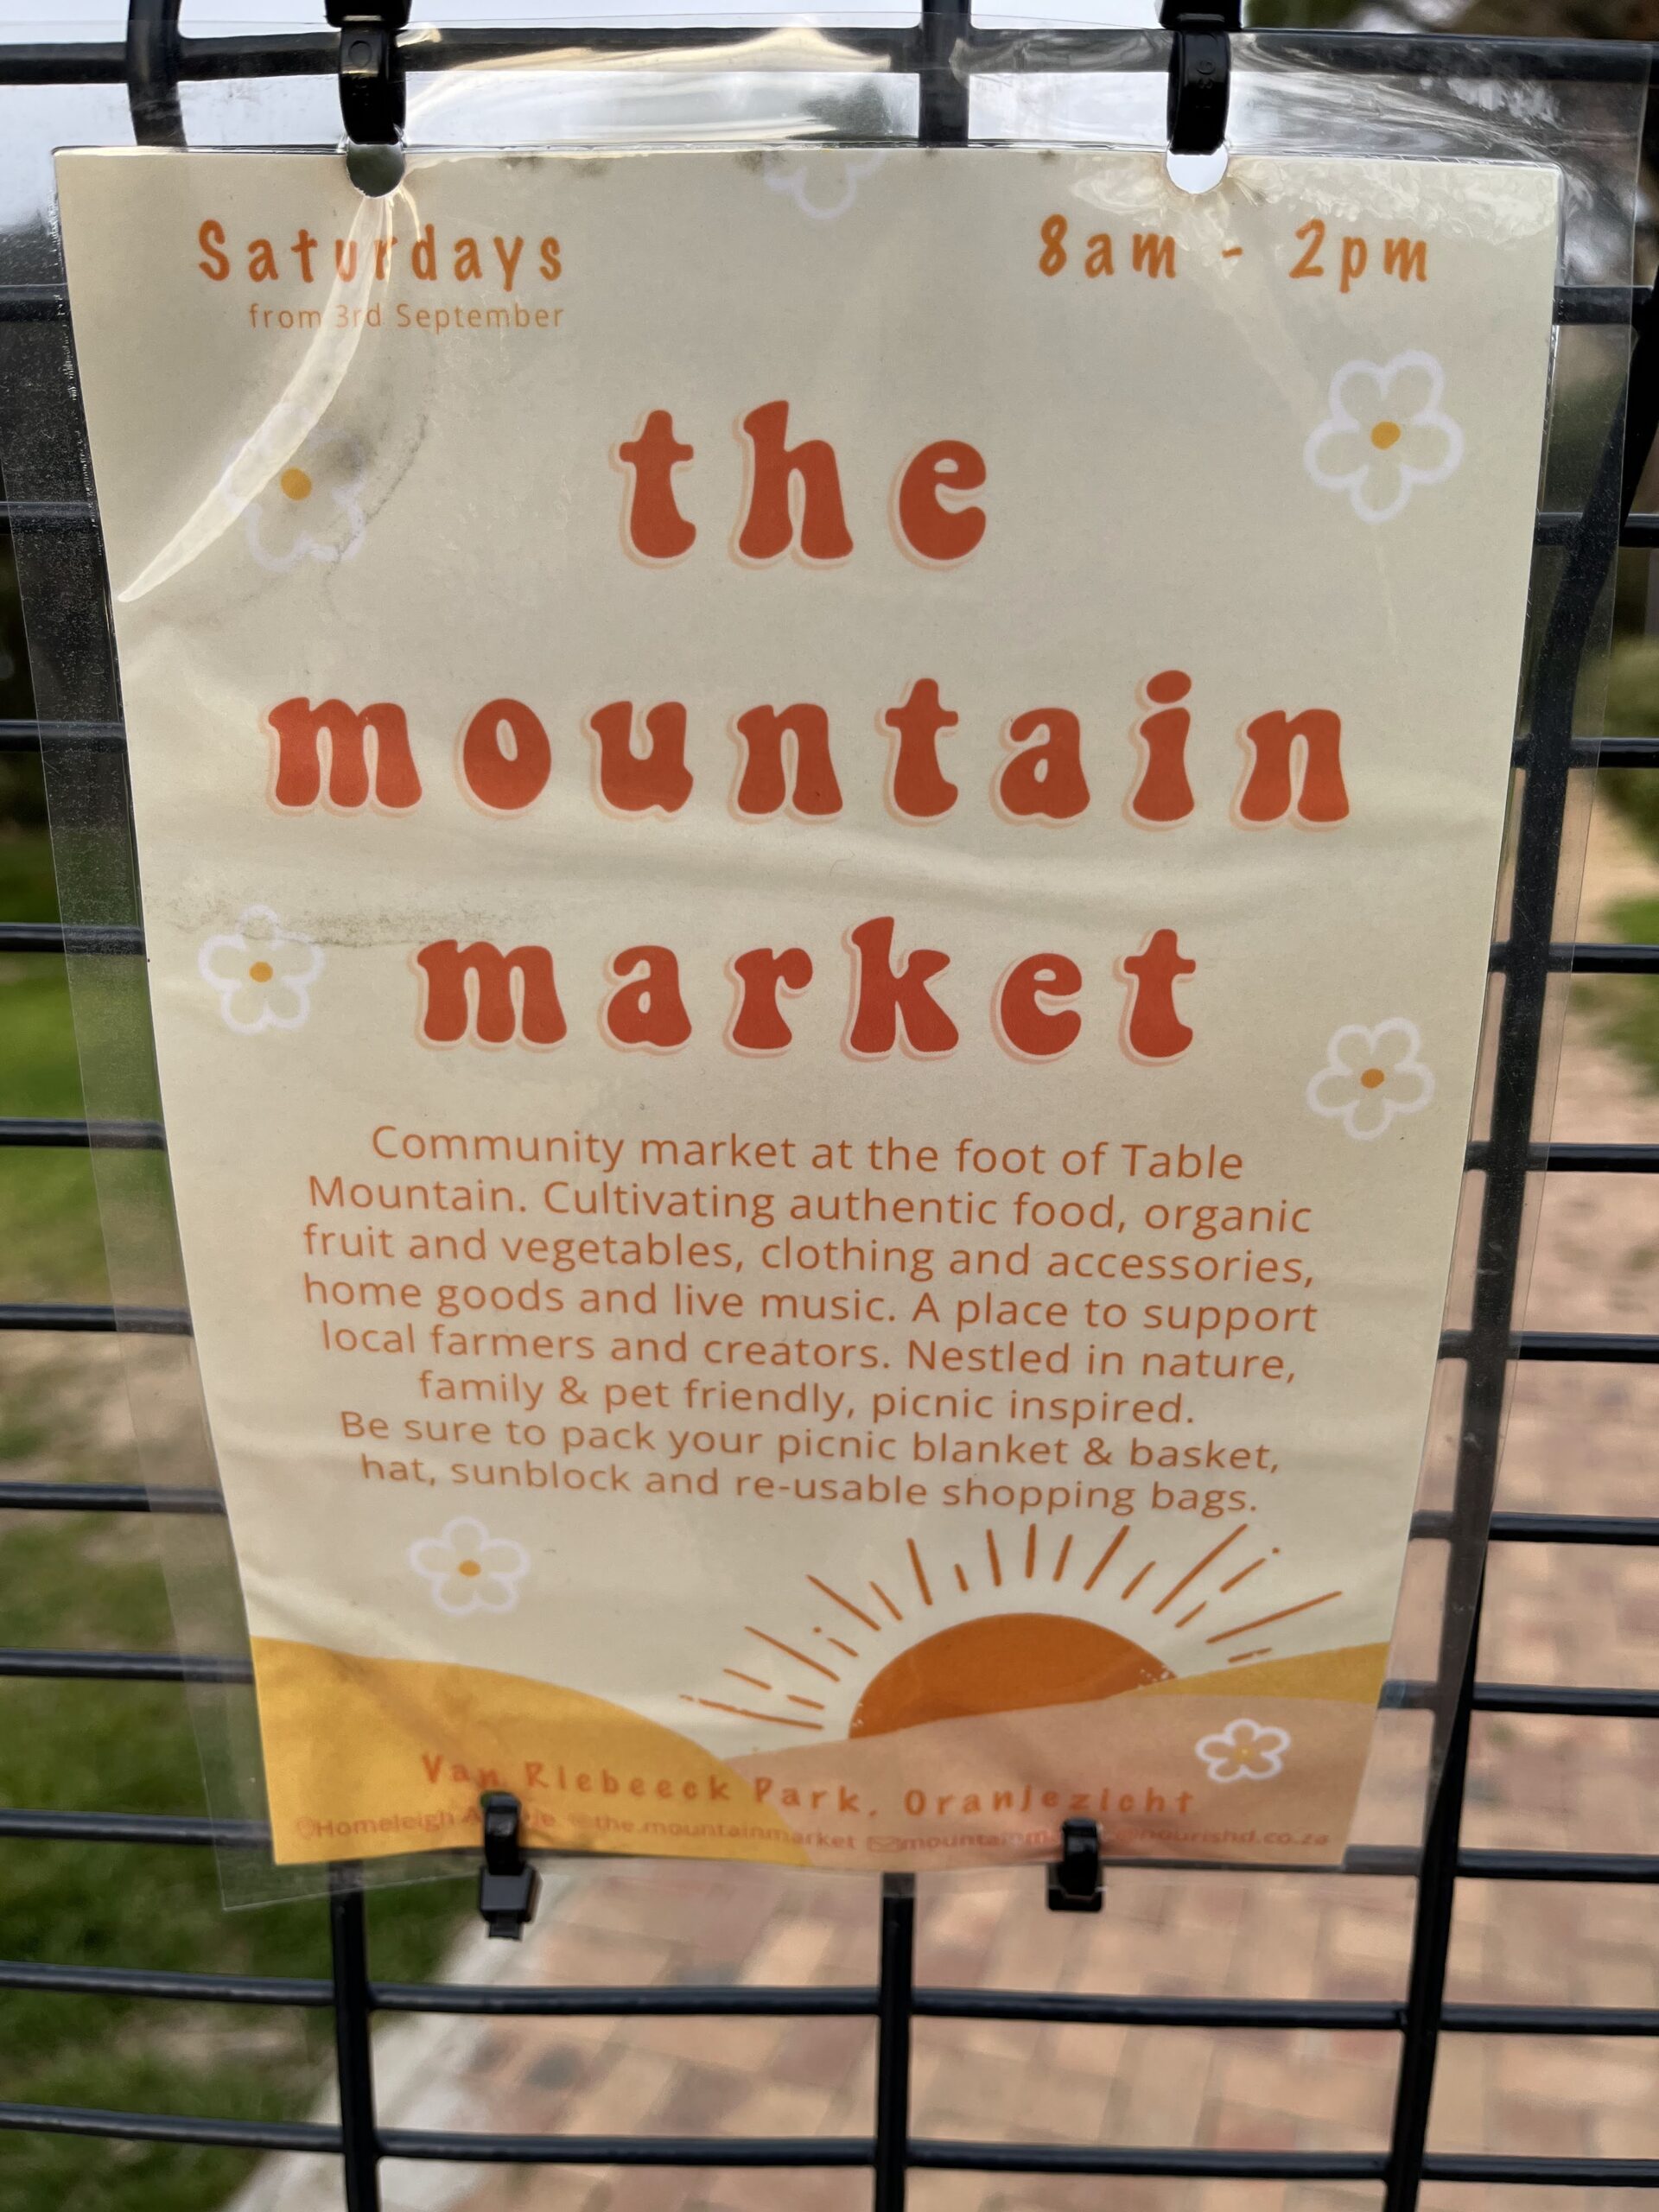 Van Riebeeck Park Mountain Market Sign